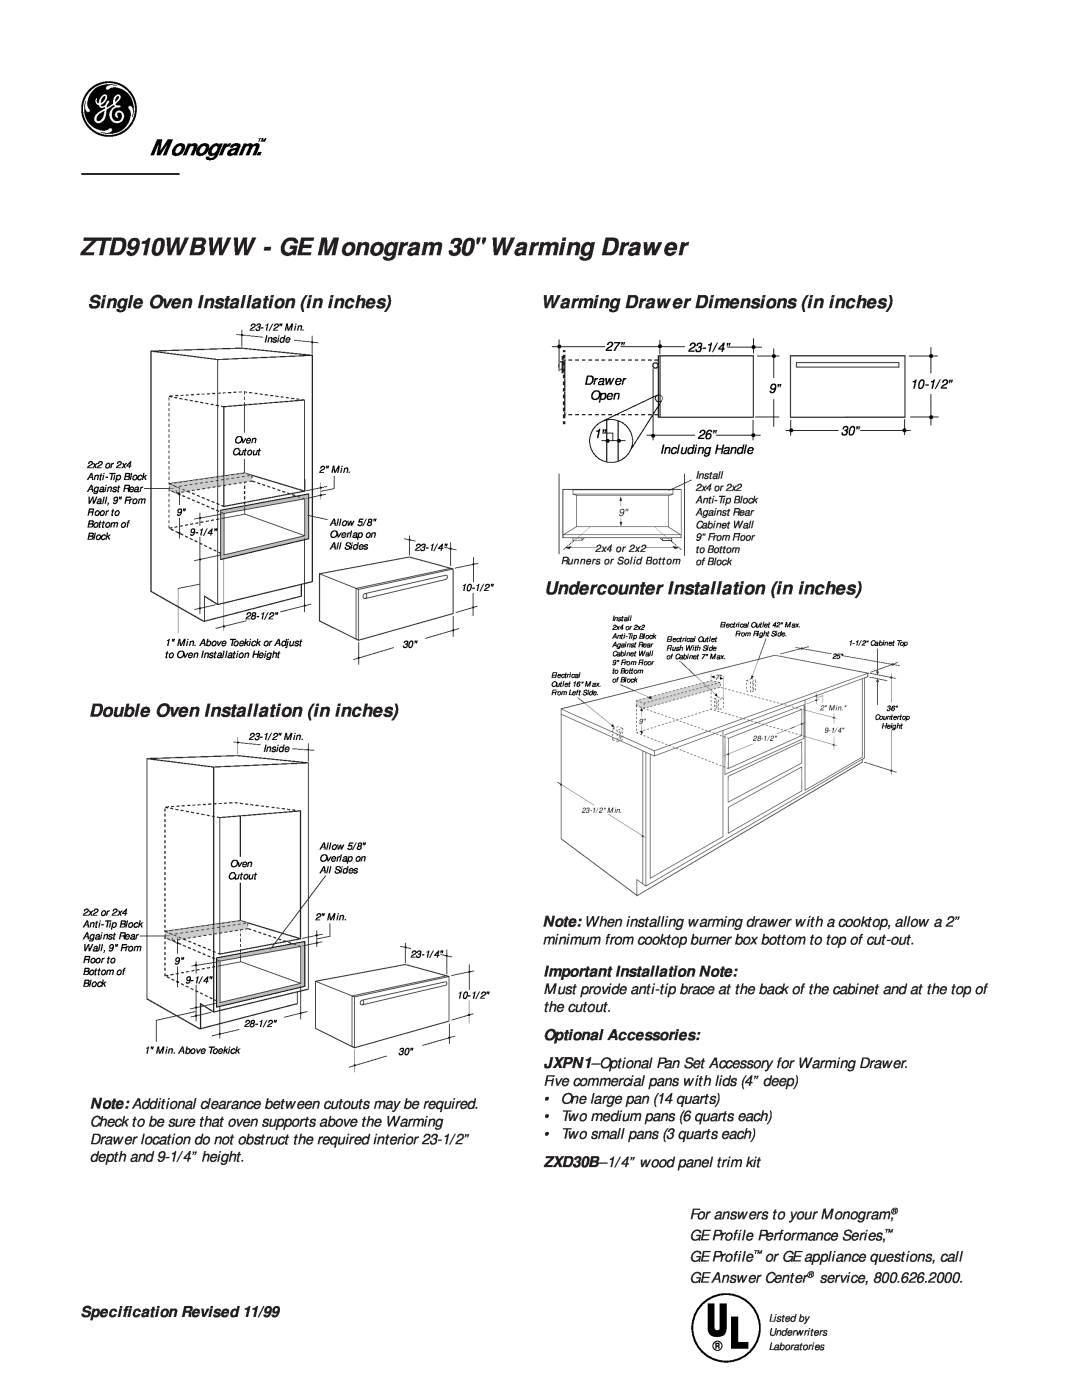 GE Monogram dimensions ZTD910WBWW - GE Monogram 30 Warming Drawer, Single Oven Installation in inches, 23-1/4, 10-1/2 